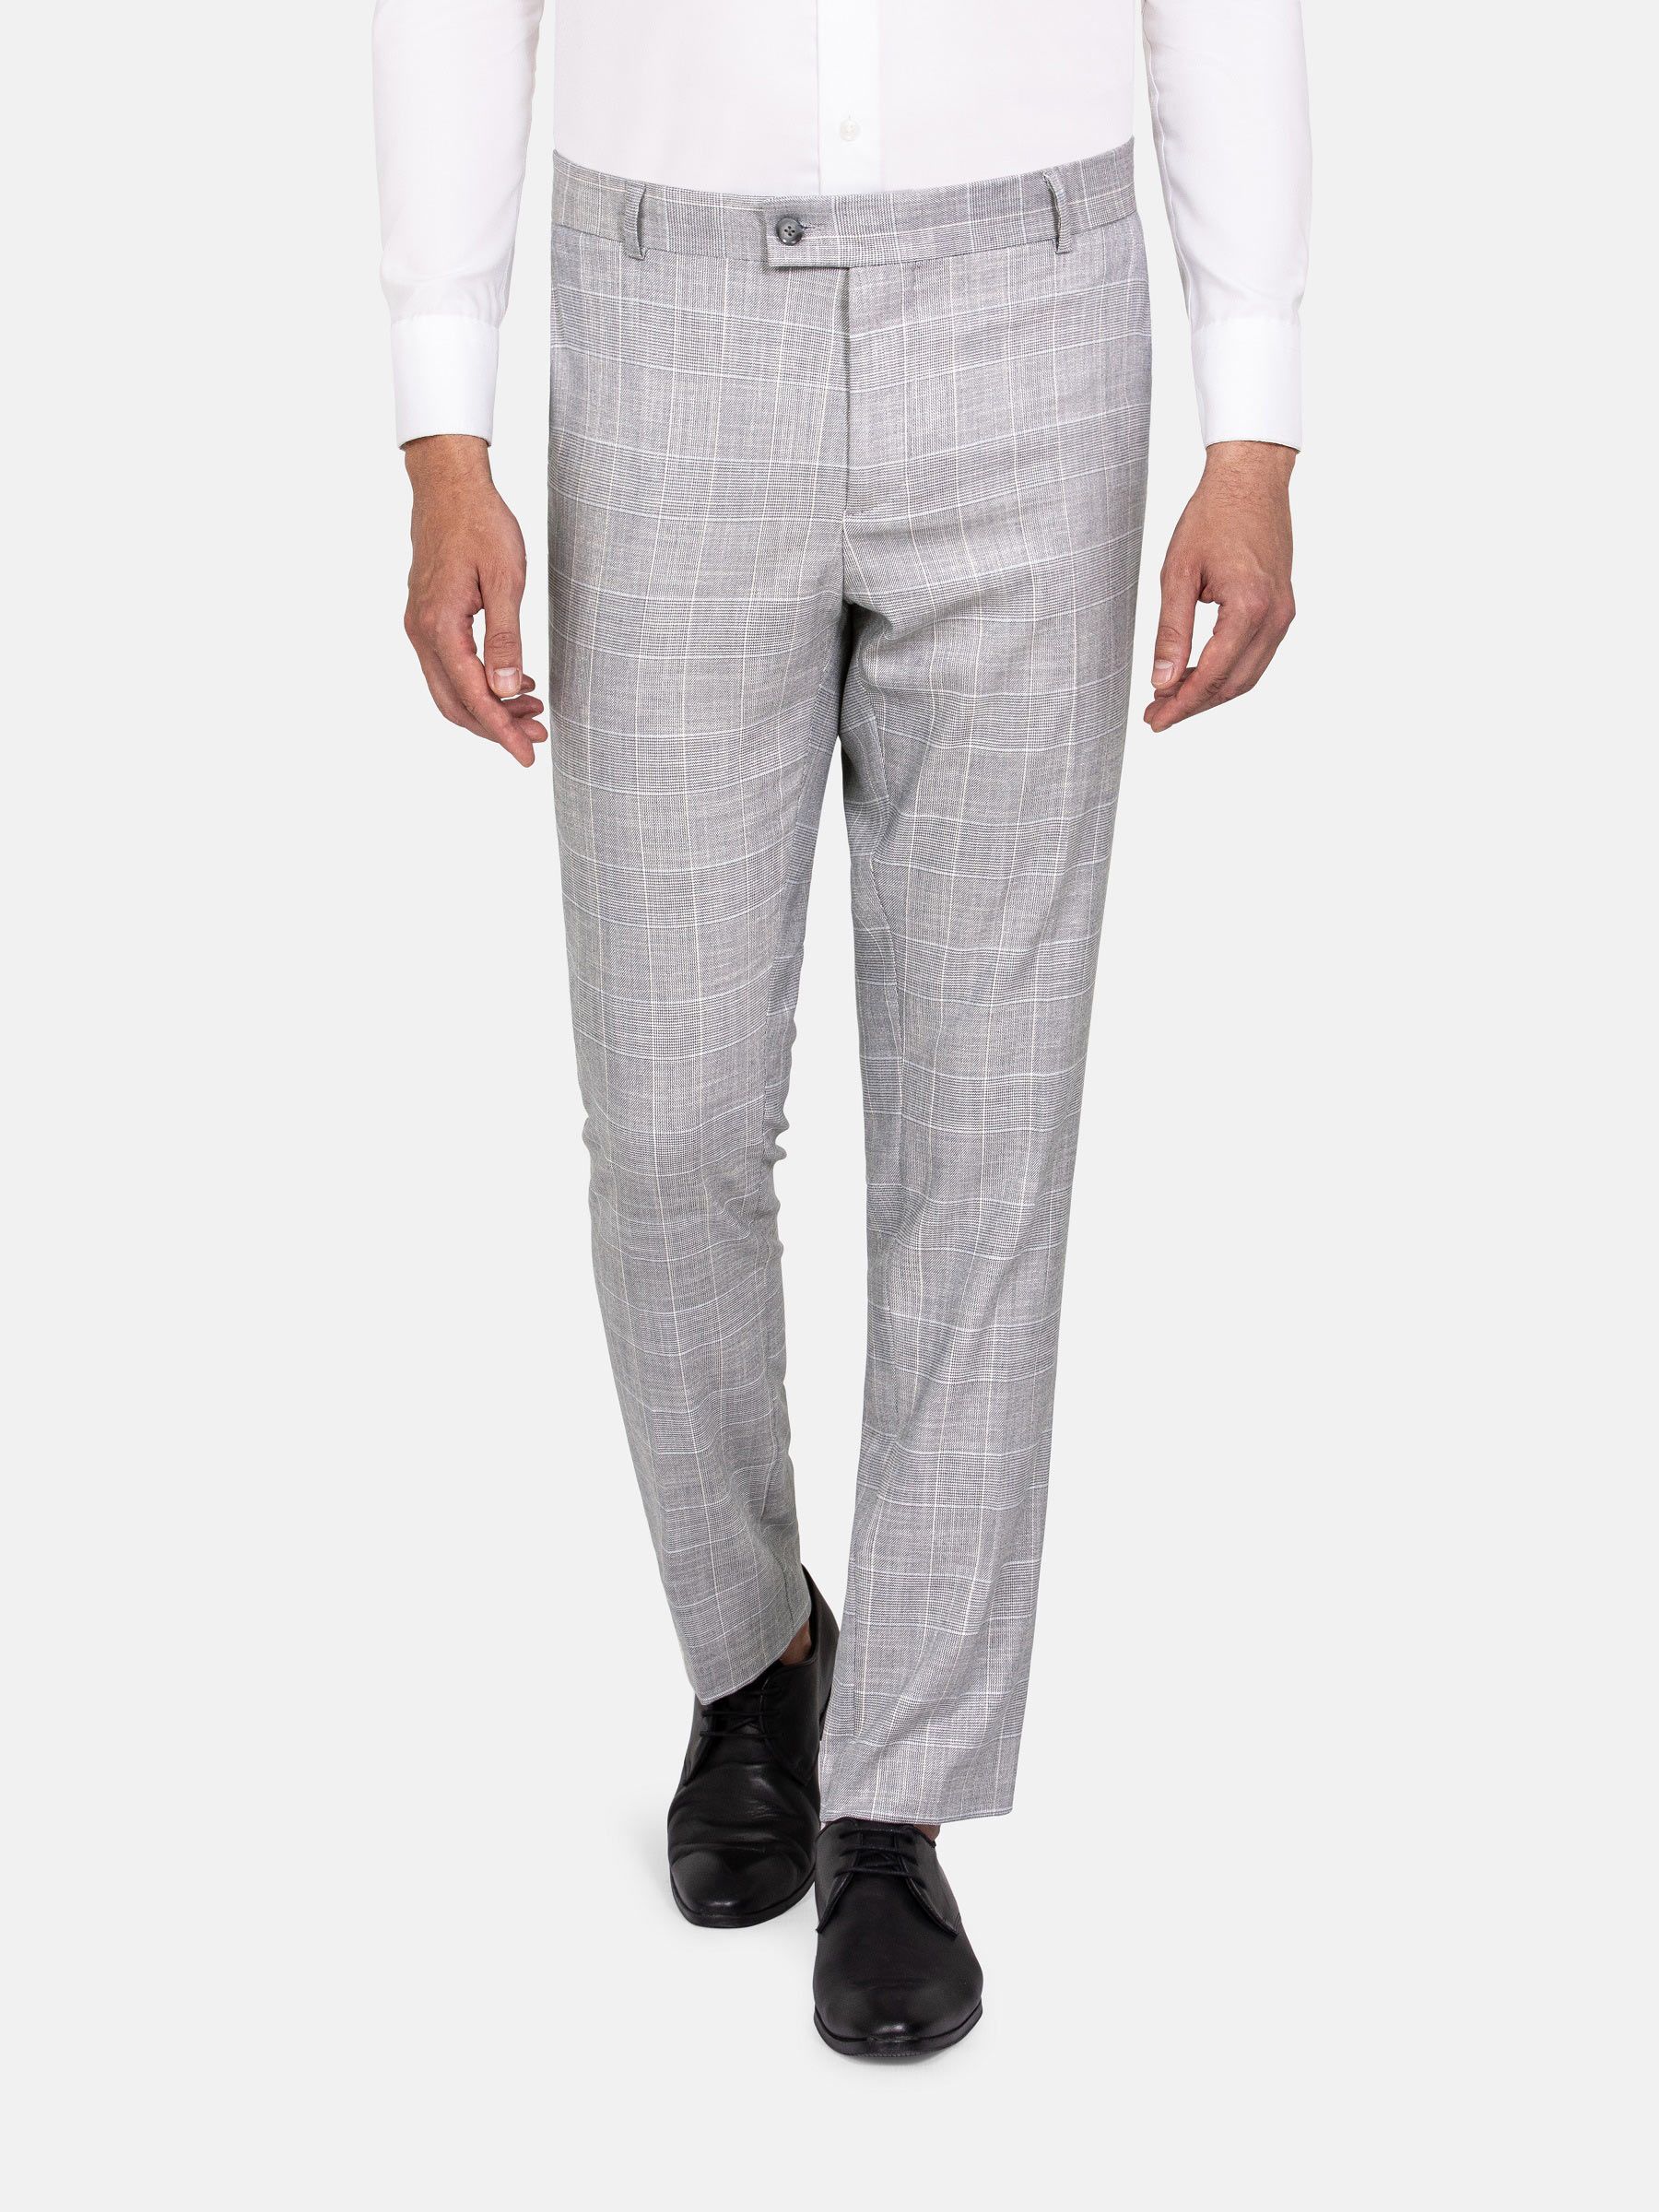 Buy ARROW Grey Structured Cotton Regular Fit Mens Formal Wear